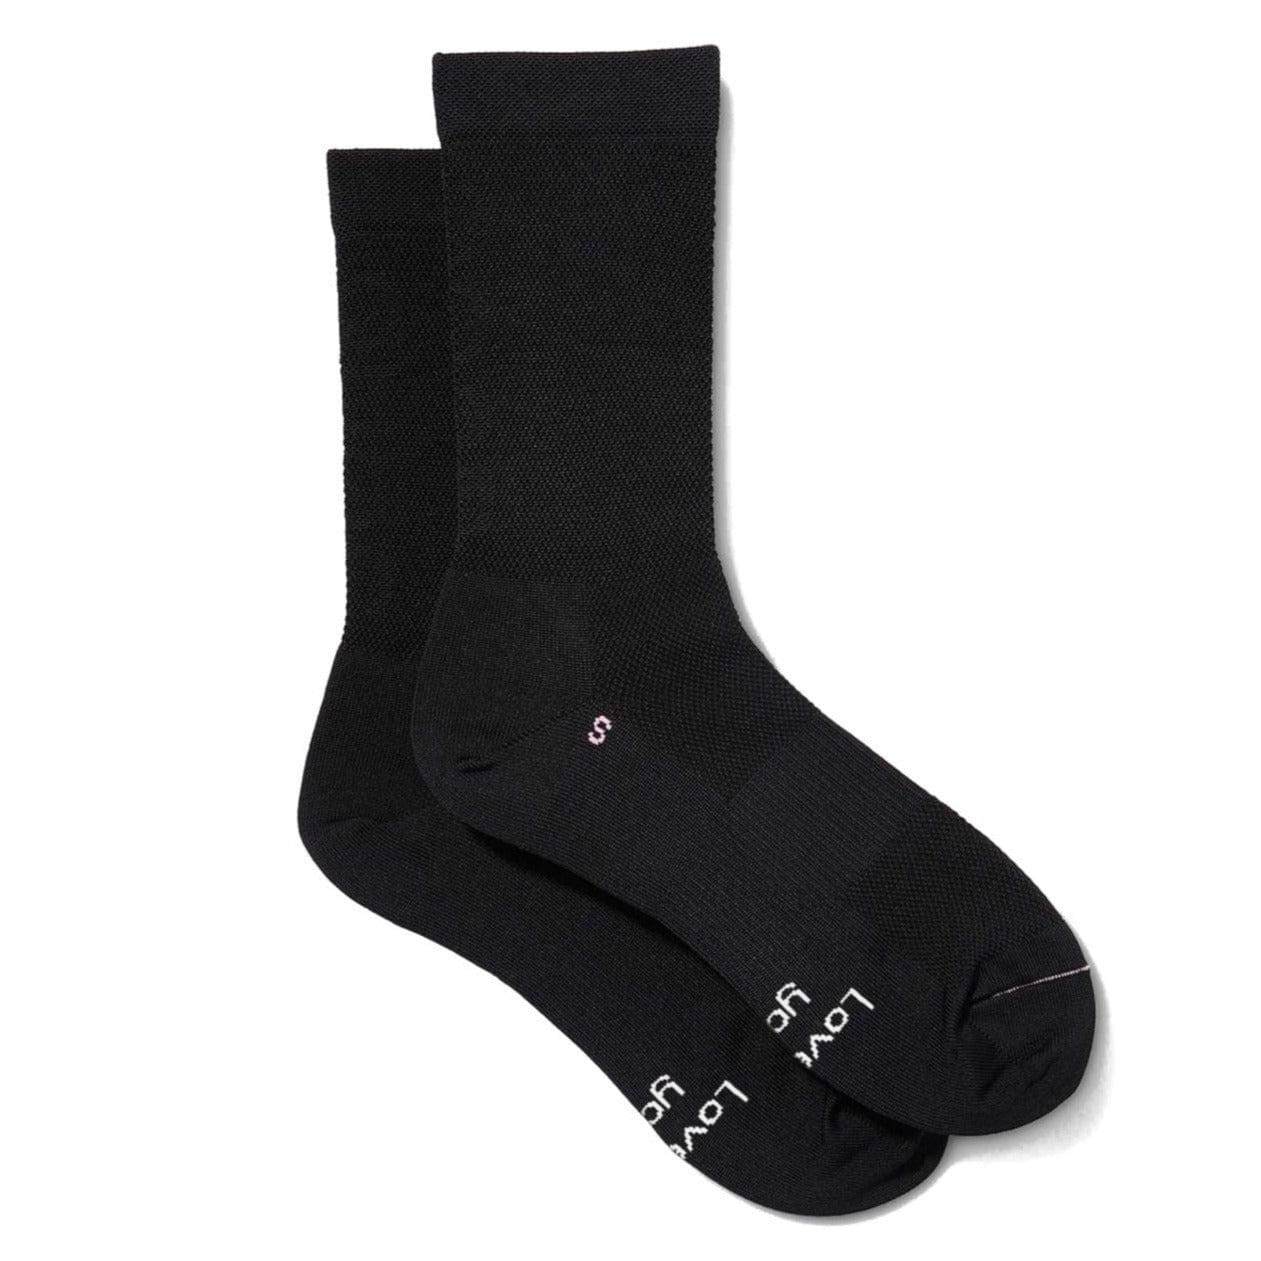 QUOC Performance Road Socks Black / S Apparel - Clothing - Socks